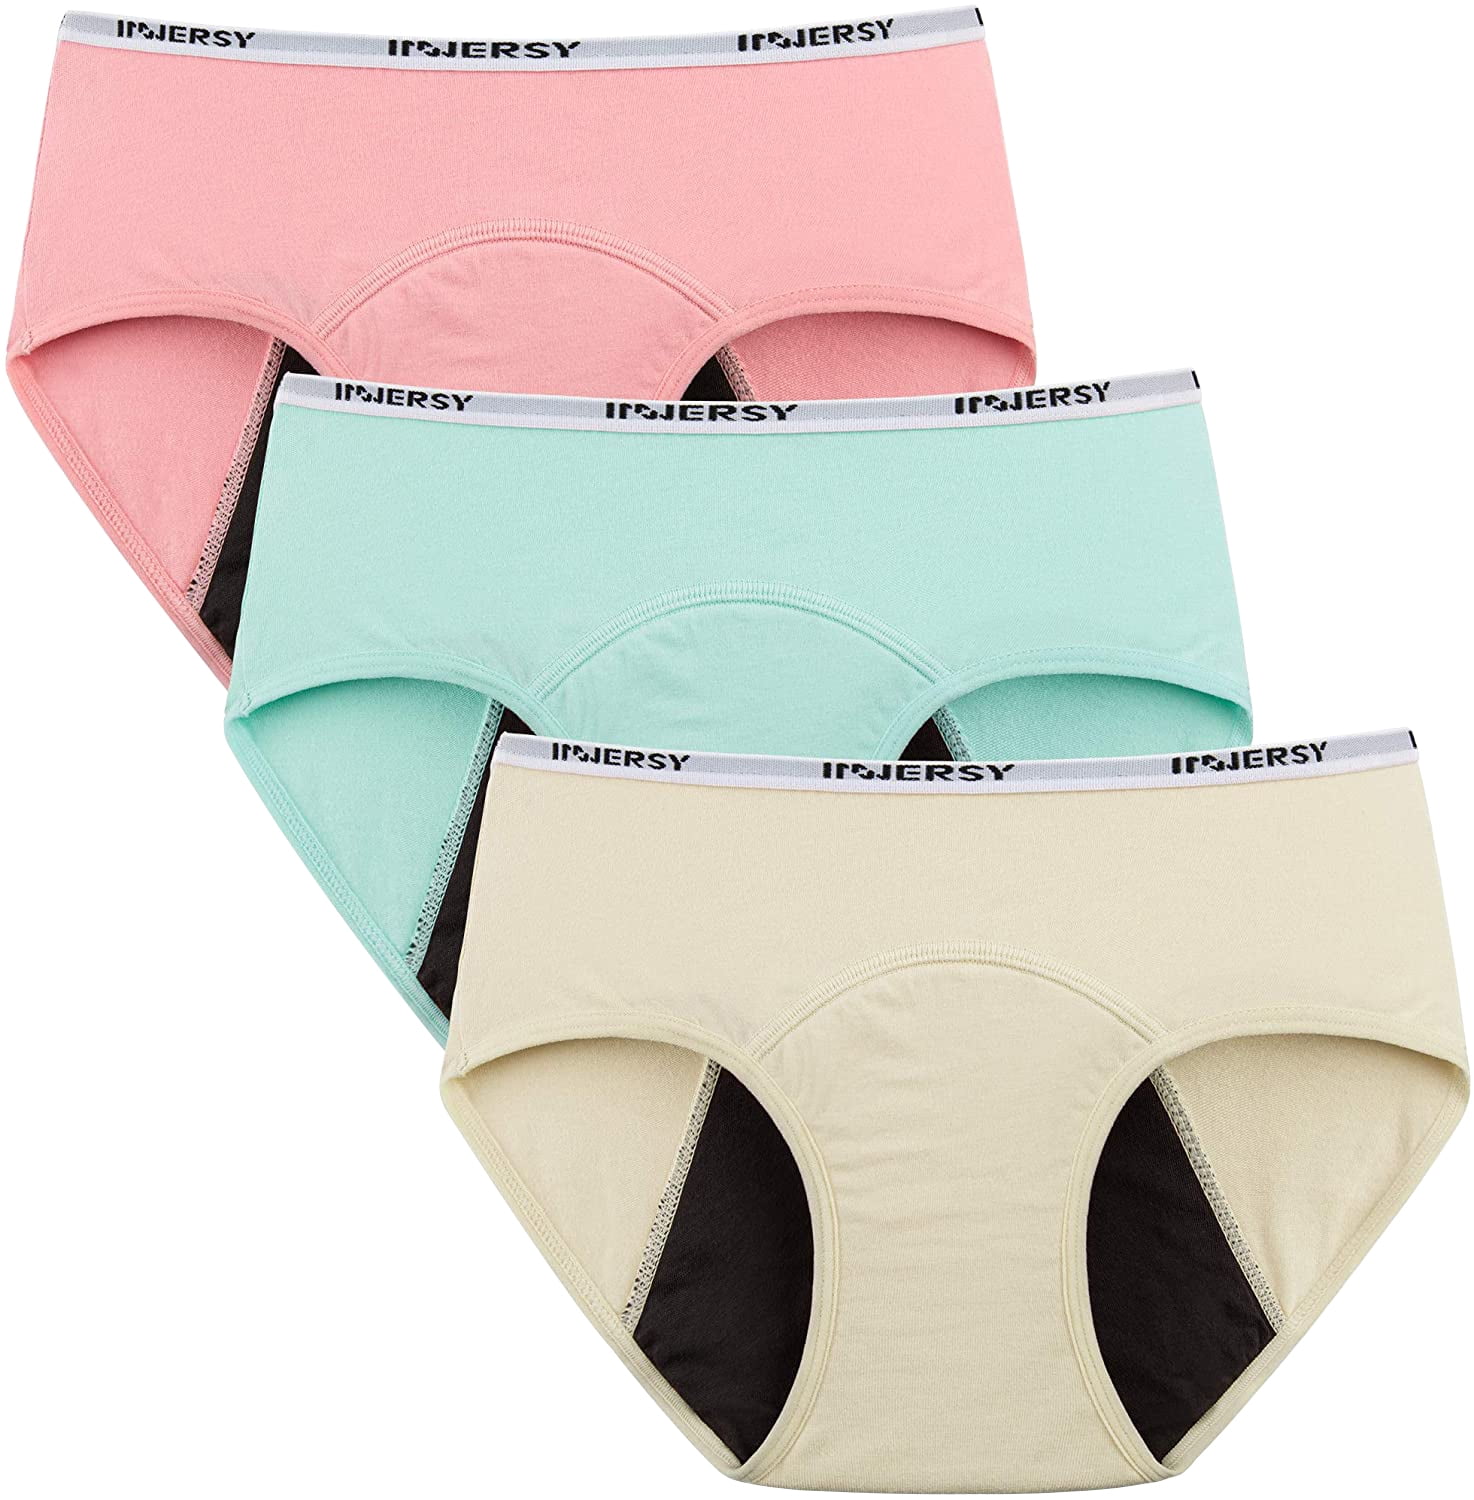 INNERSY Big Girls' Period Panties Cotton Menstrual Underwear For Teens  3-Pack (L(12-14 yrs), Beige/Pink/Green)